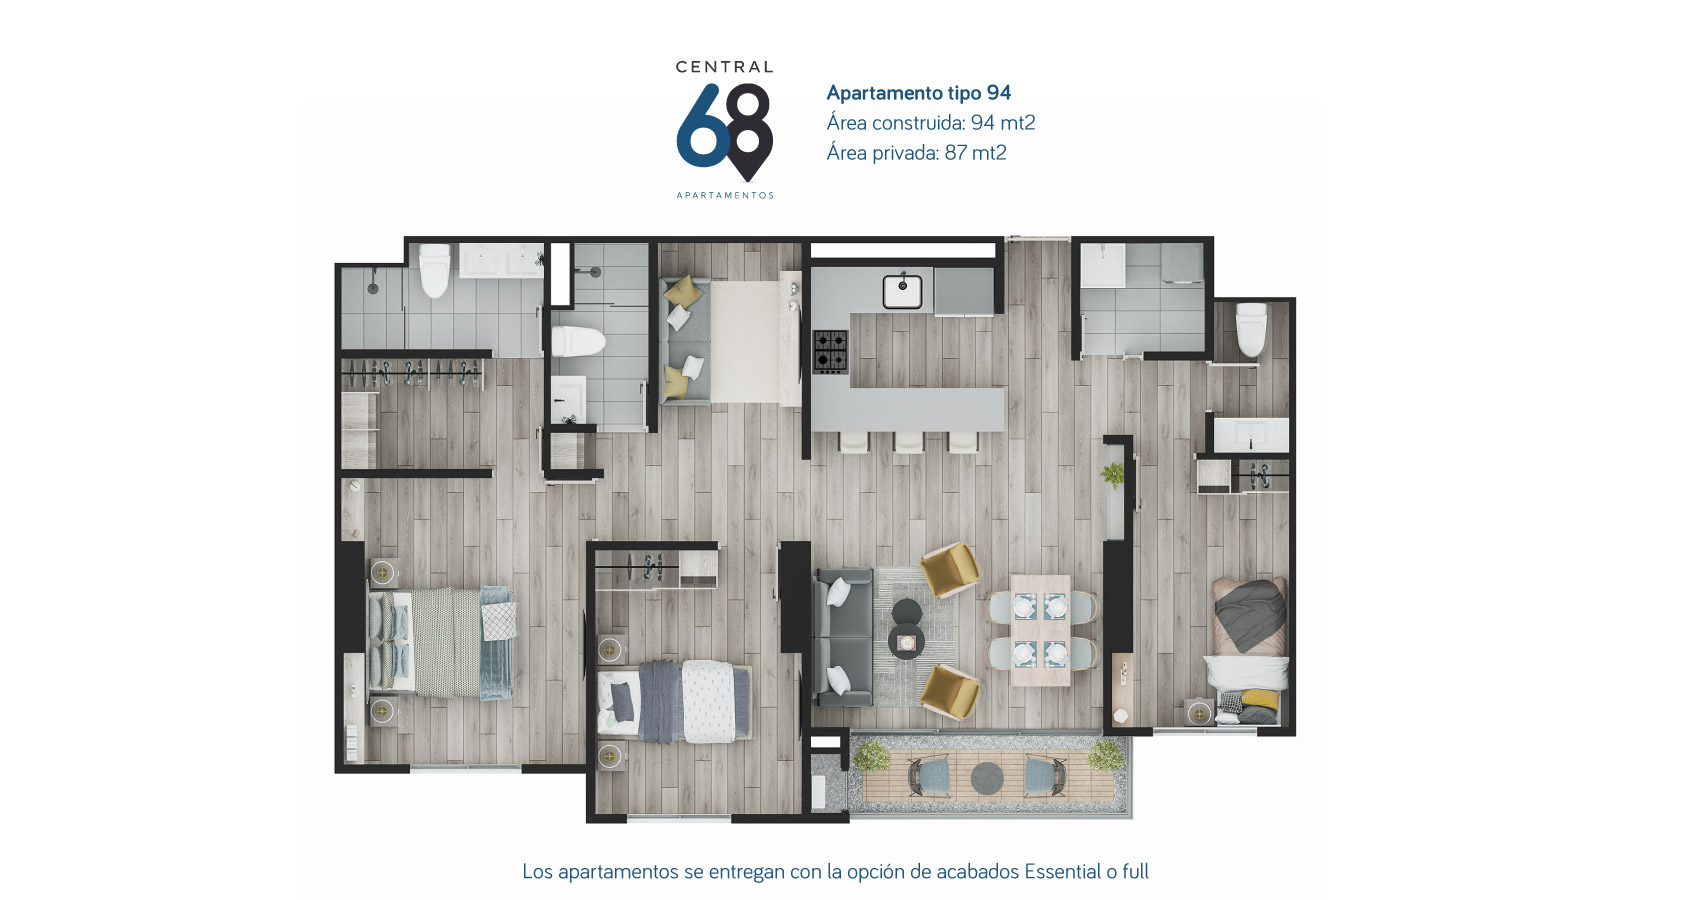 Central 68 apartamento tipo 94 